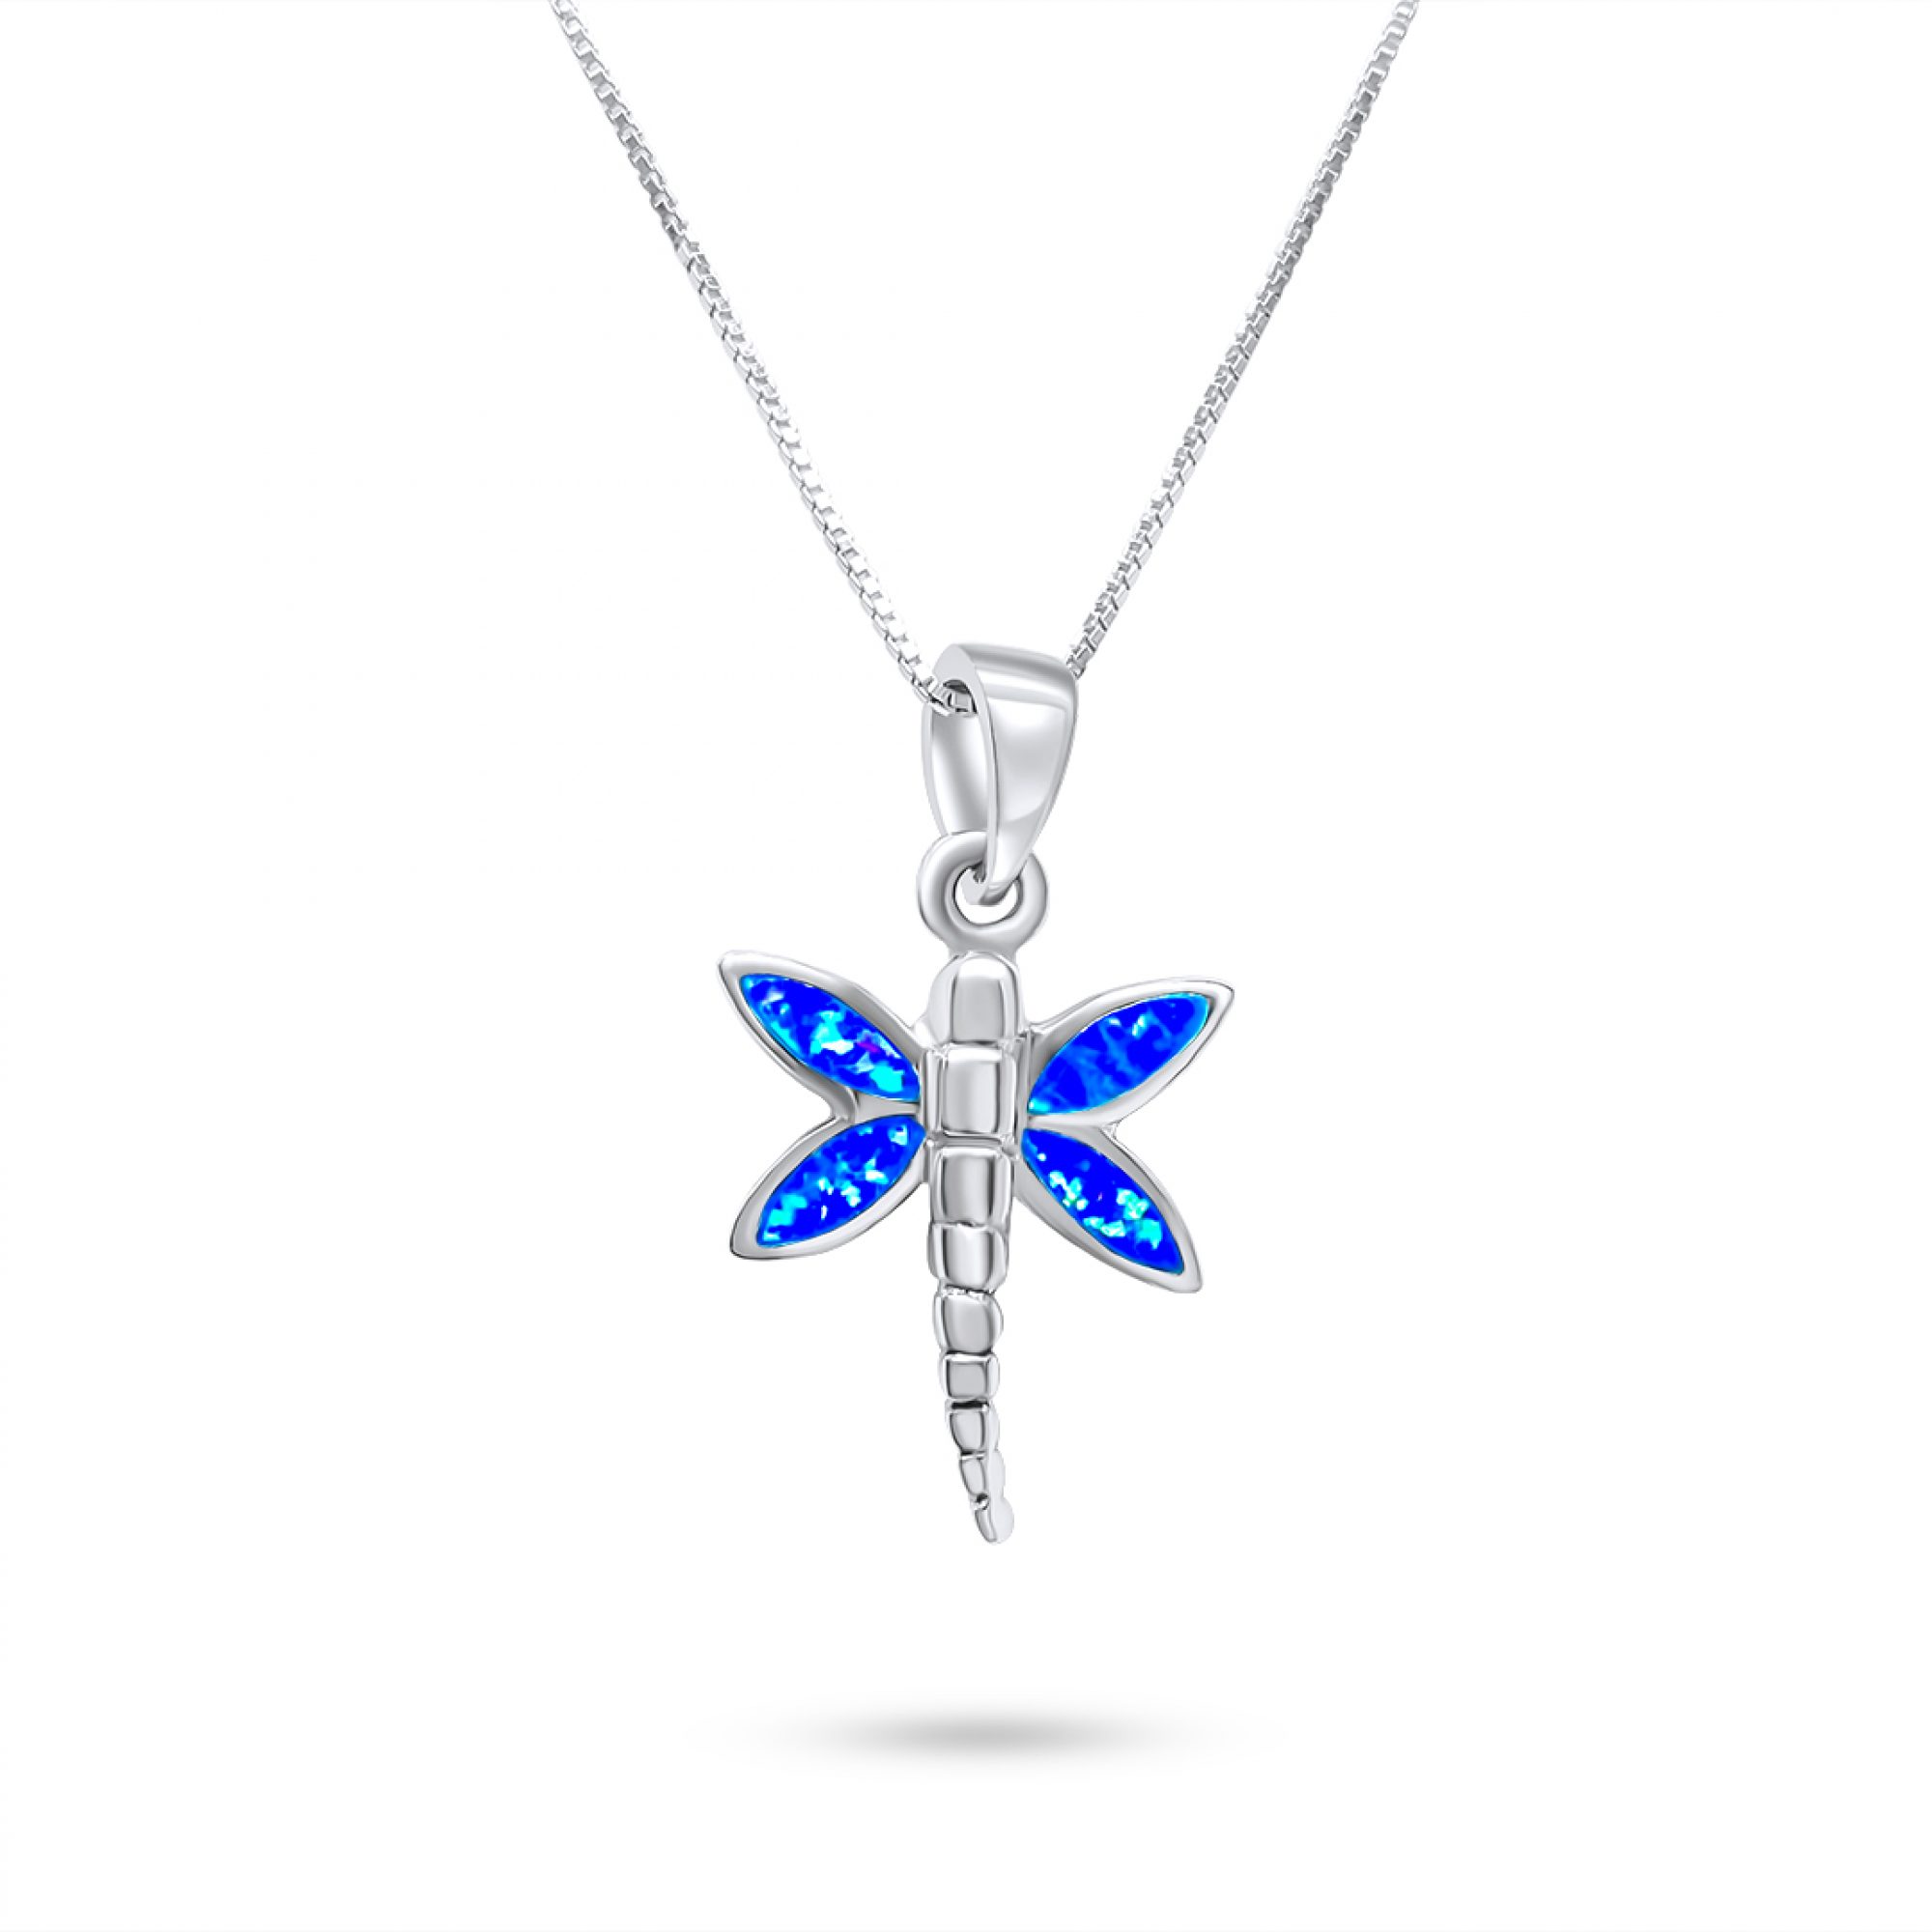 Opal dragonfly pendant